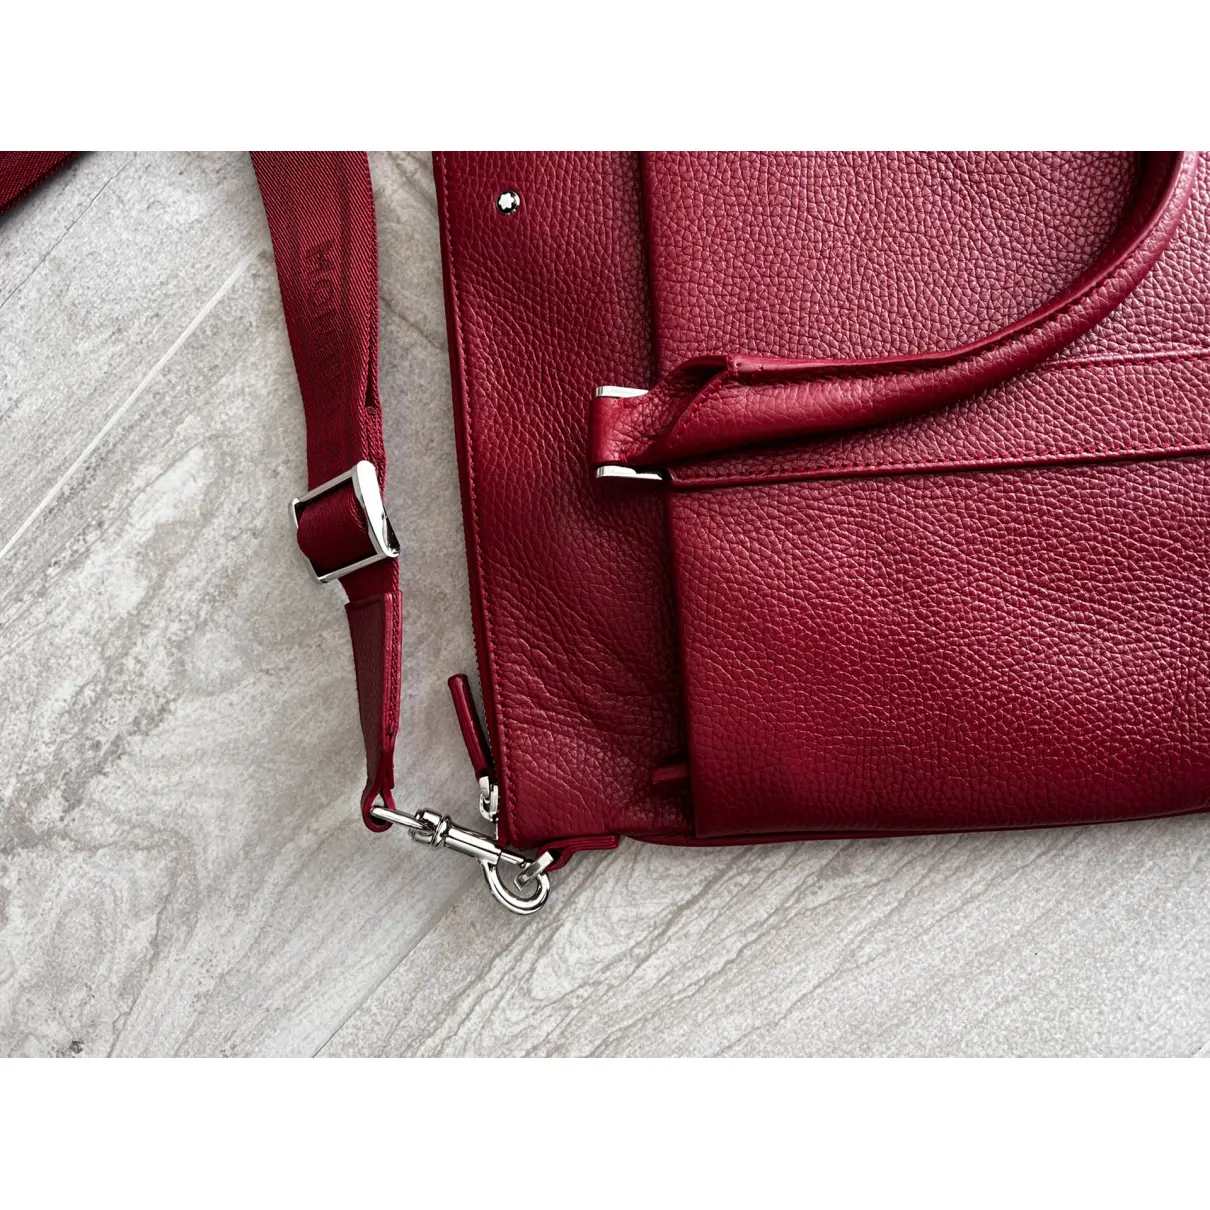 Leather handbag Montblanc